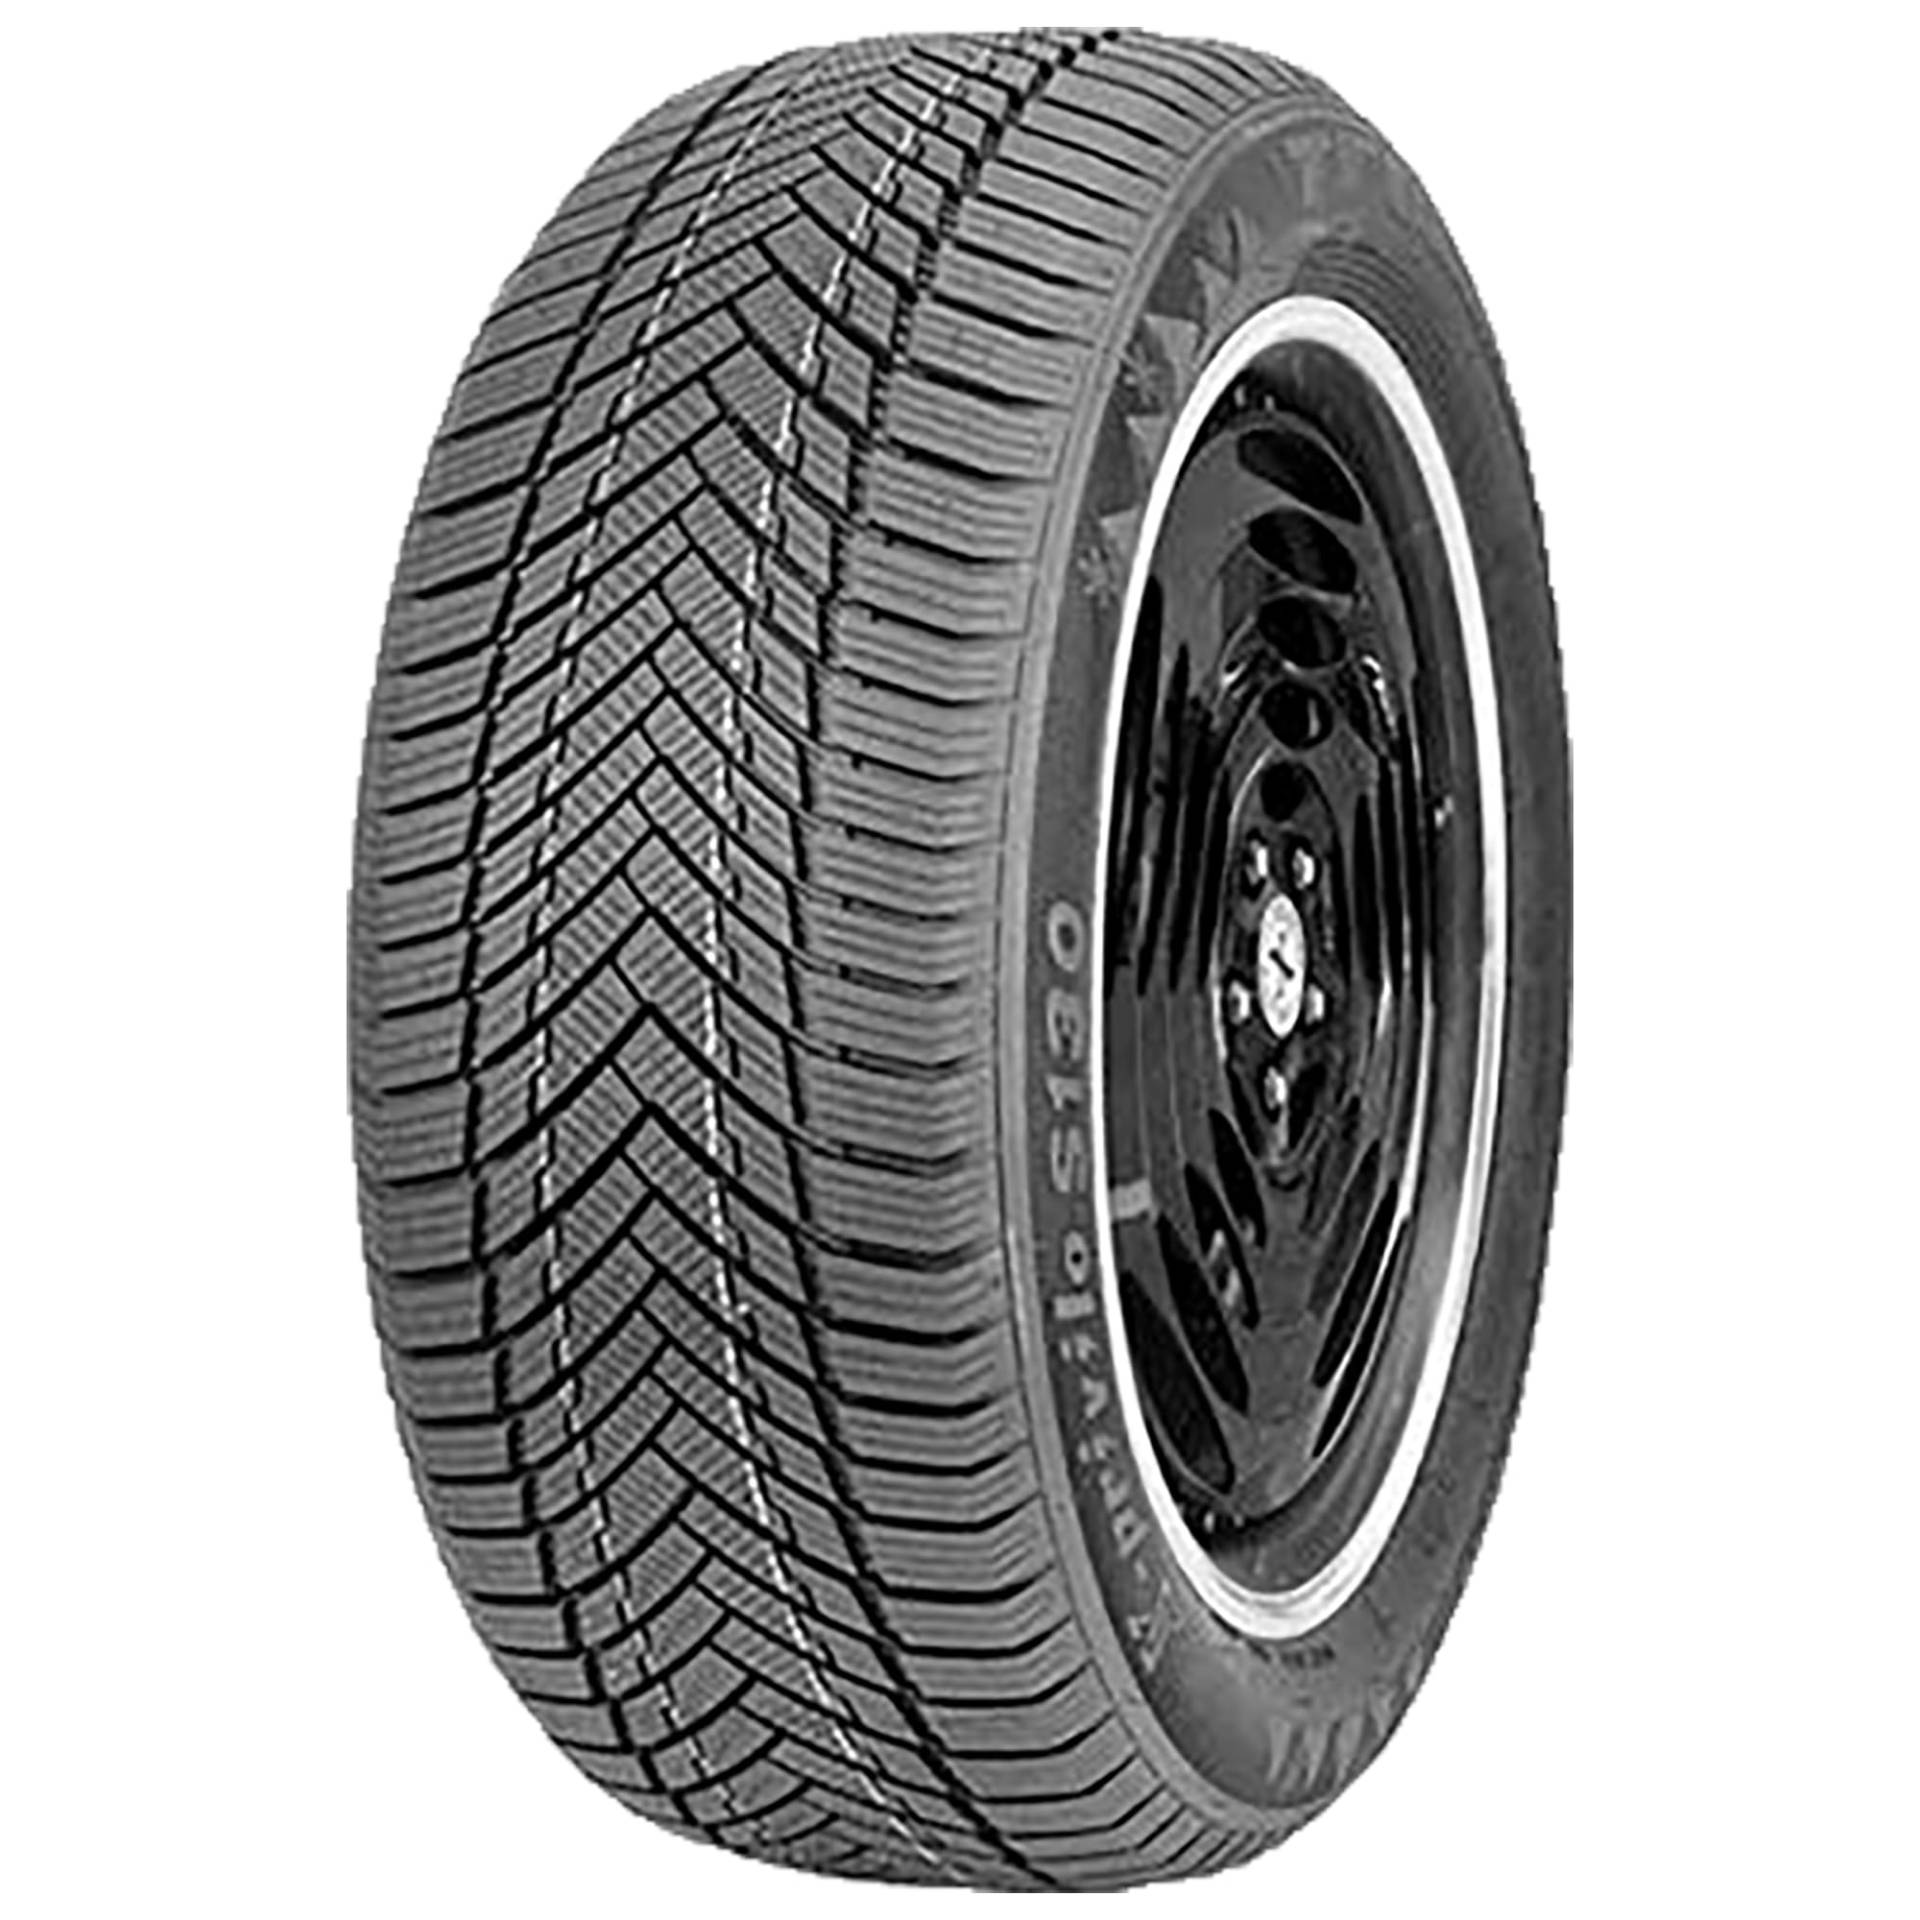 Reifen pneus Tracmax X privilo s 130 185 55 R14 80T TL winterreifen autoreifen von Tracmax